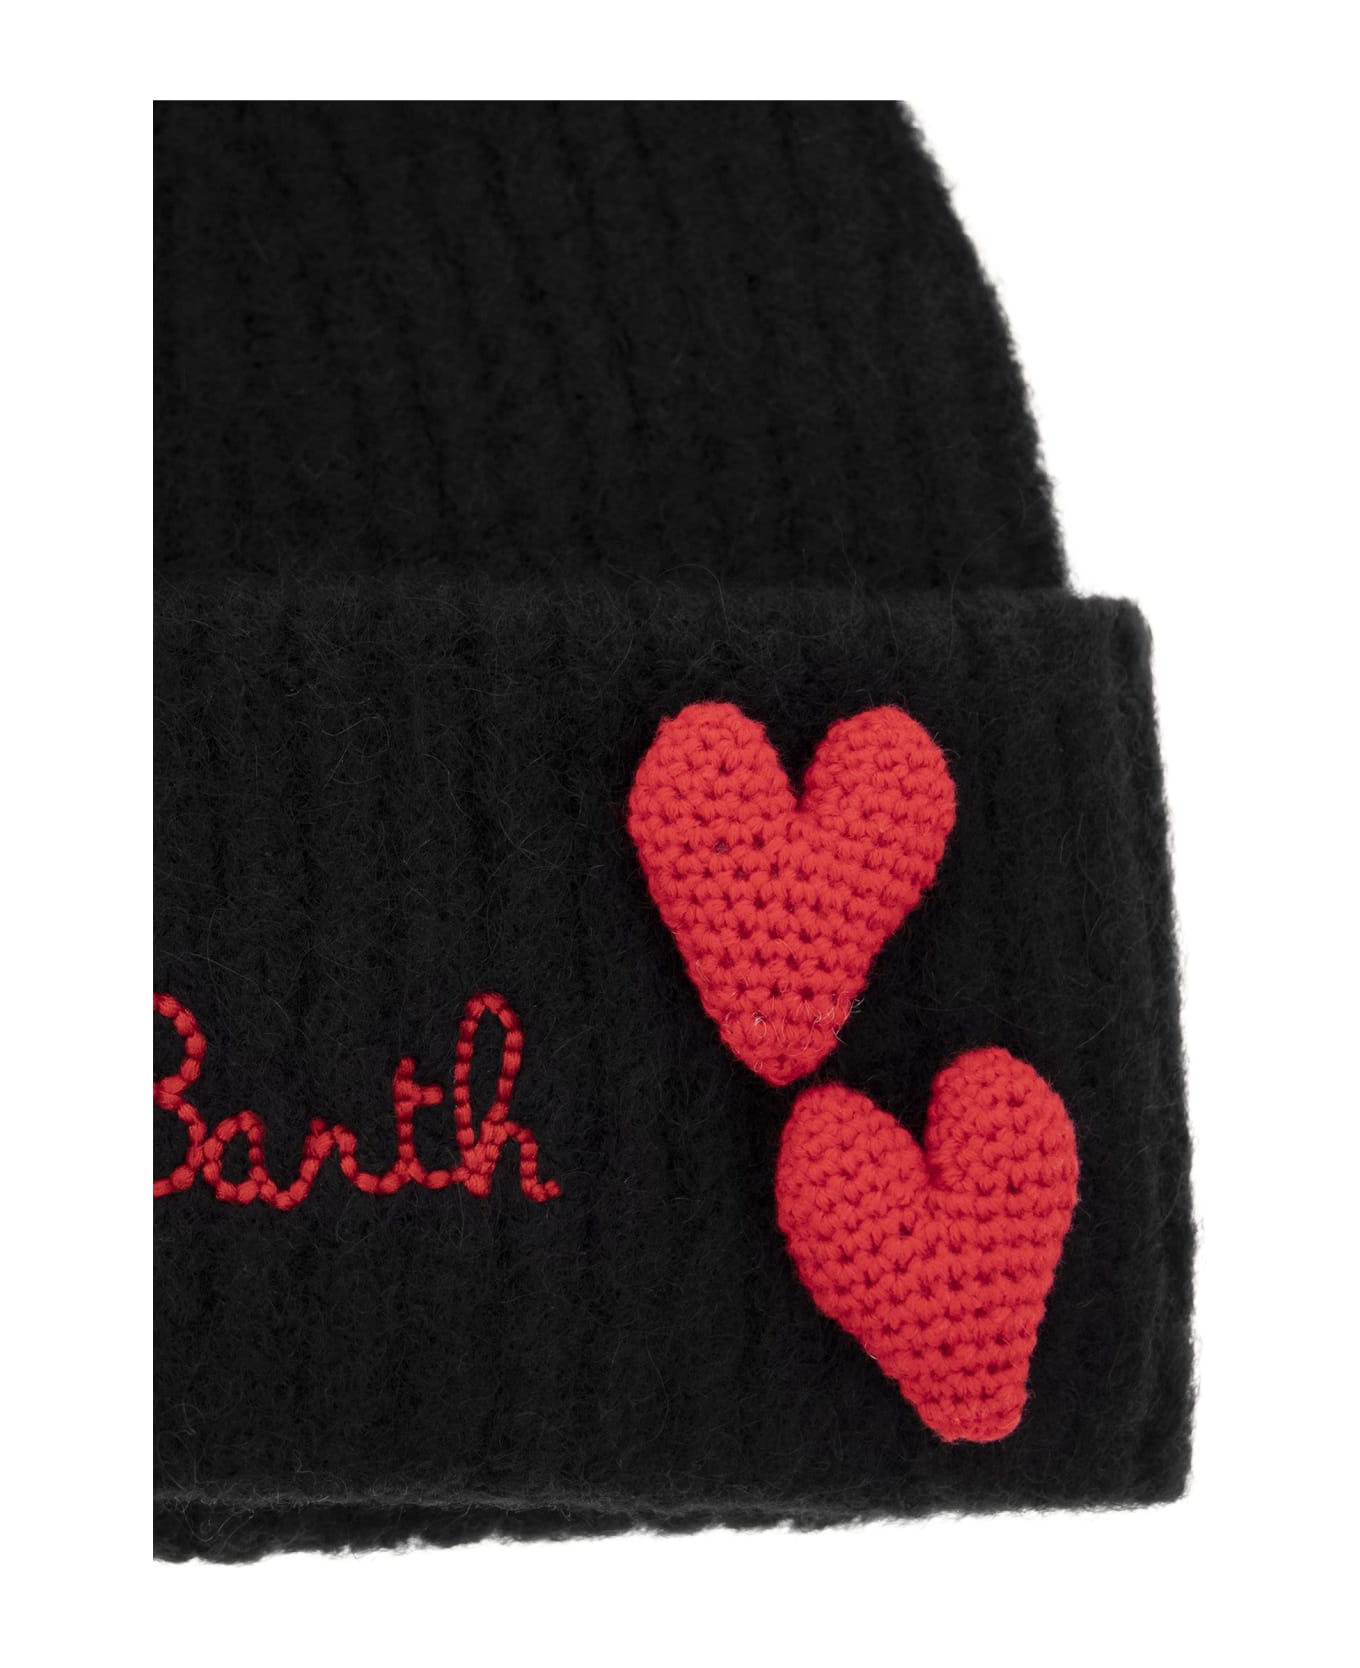 MC2 Saint Barth Alpaca And Wool Blend Cap - Black 帽子